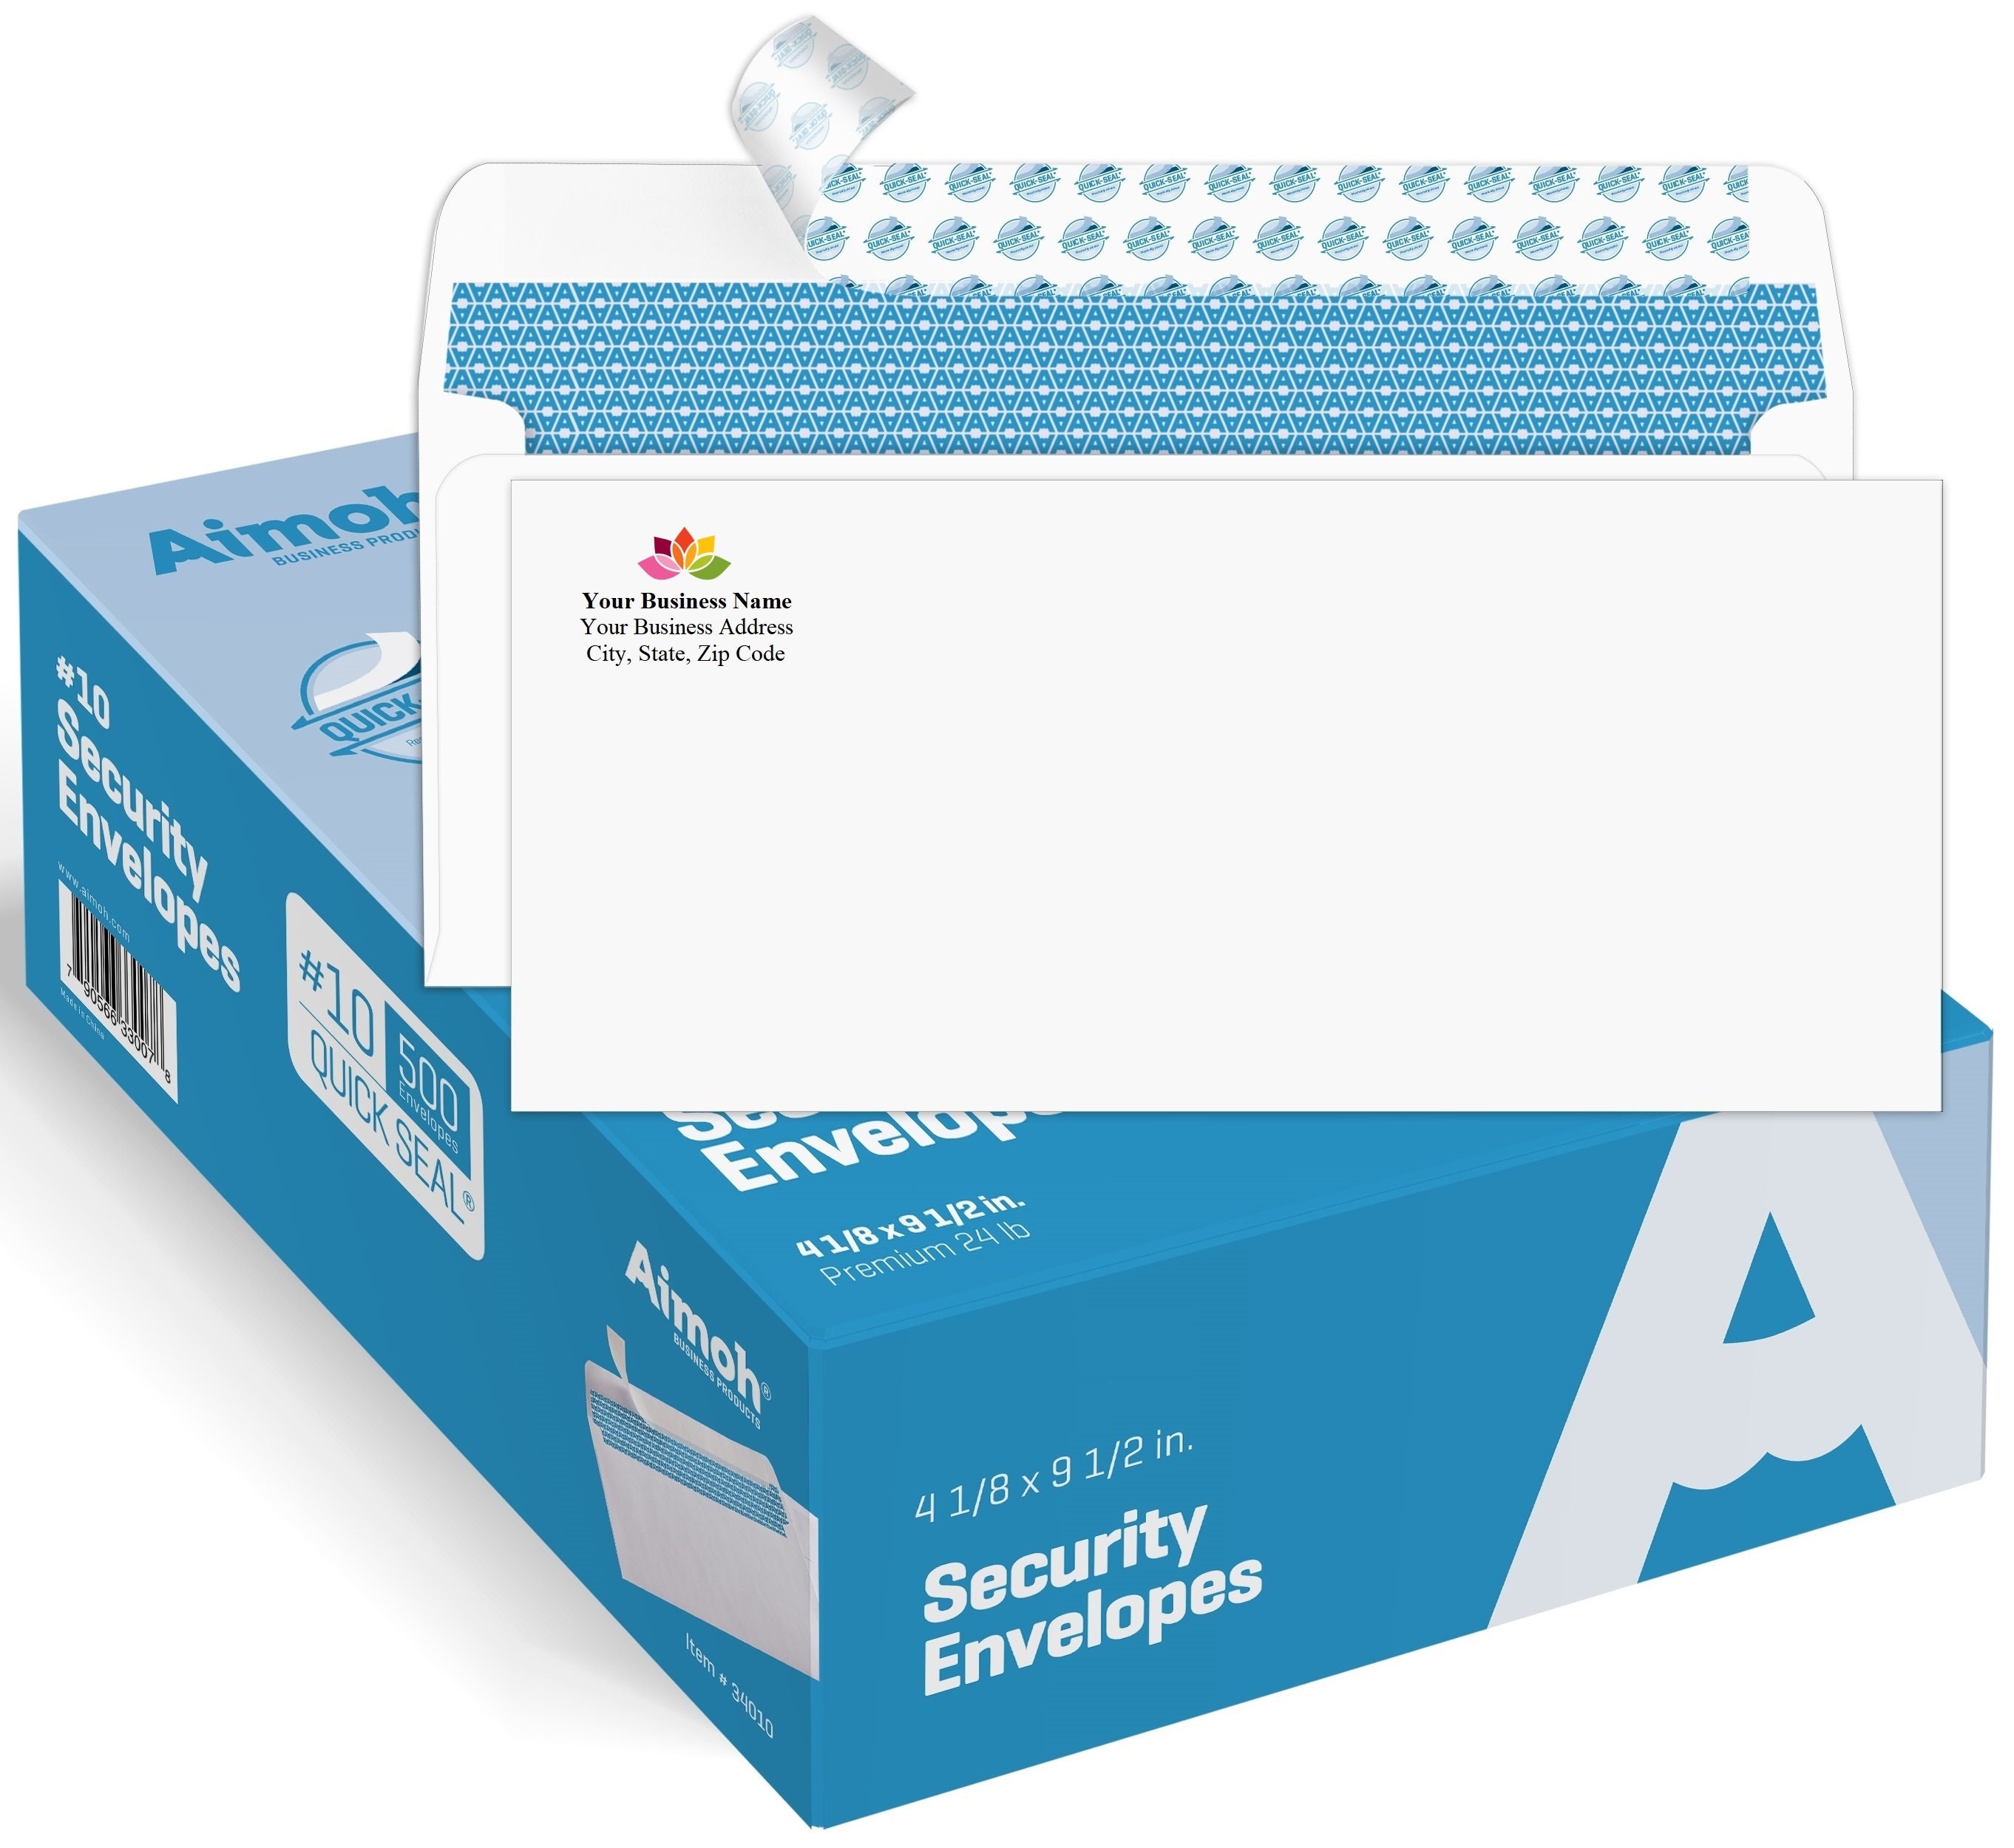  28lb White Linen Resume Paper & Envelopes - 40 Sets : Office  Products